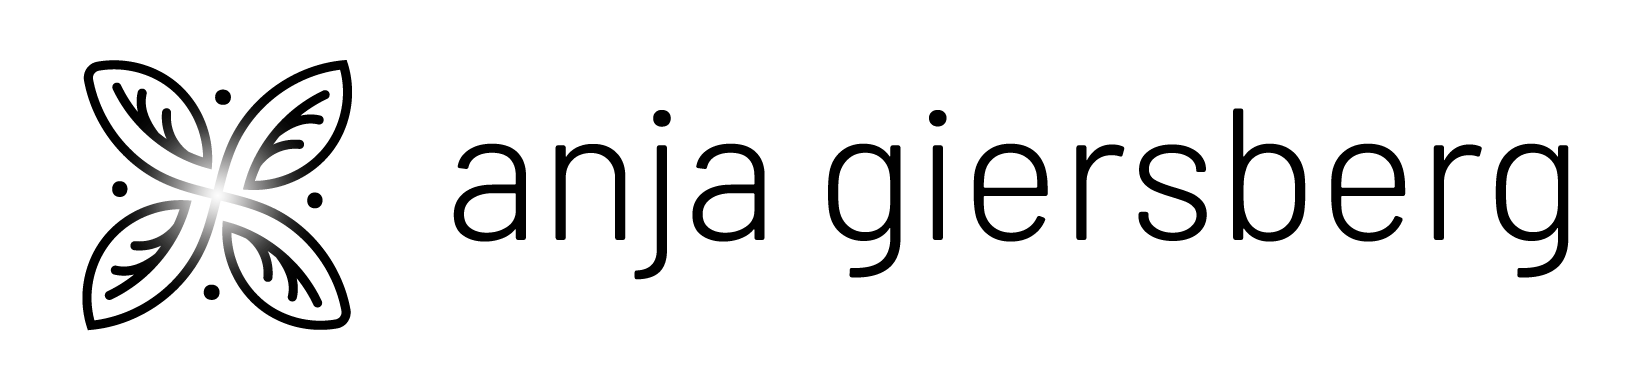 logo light